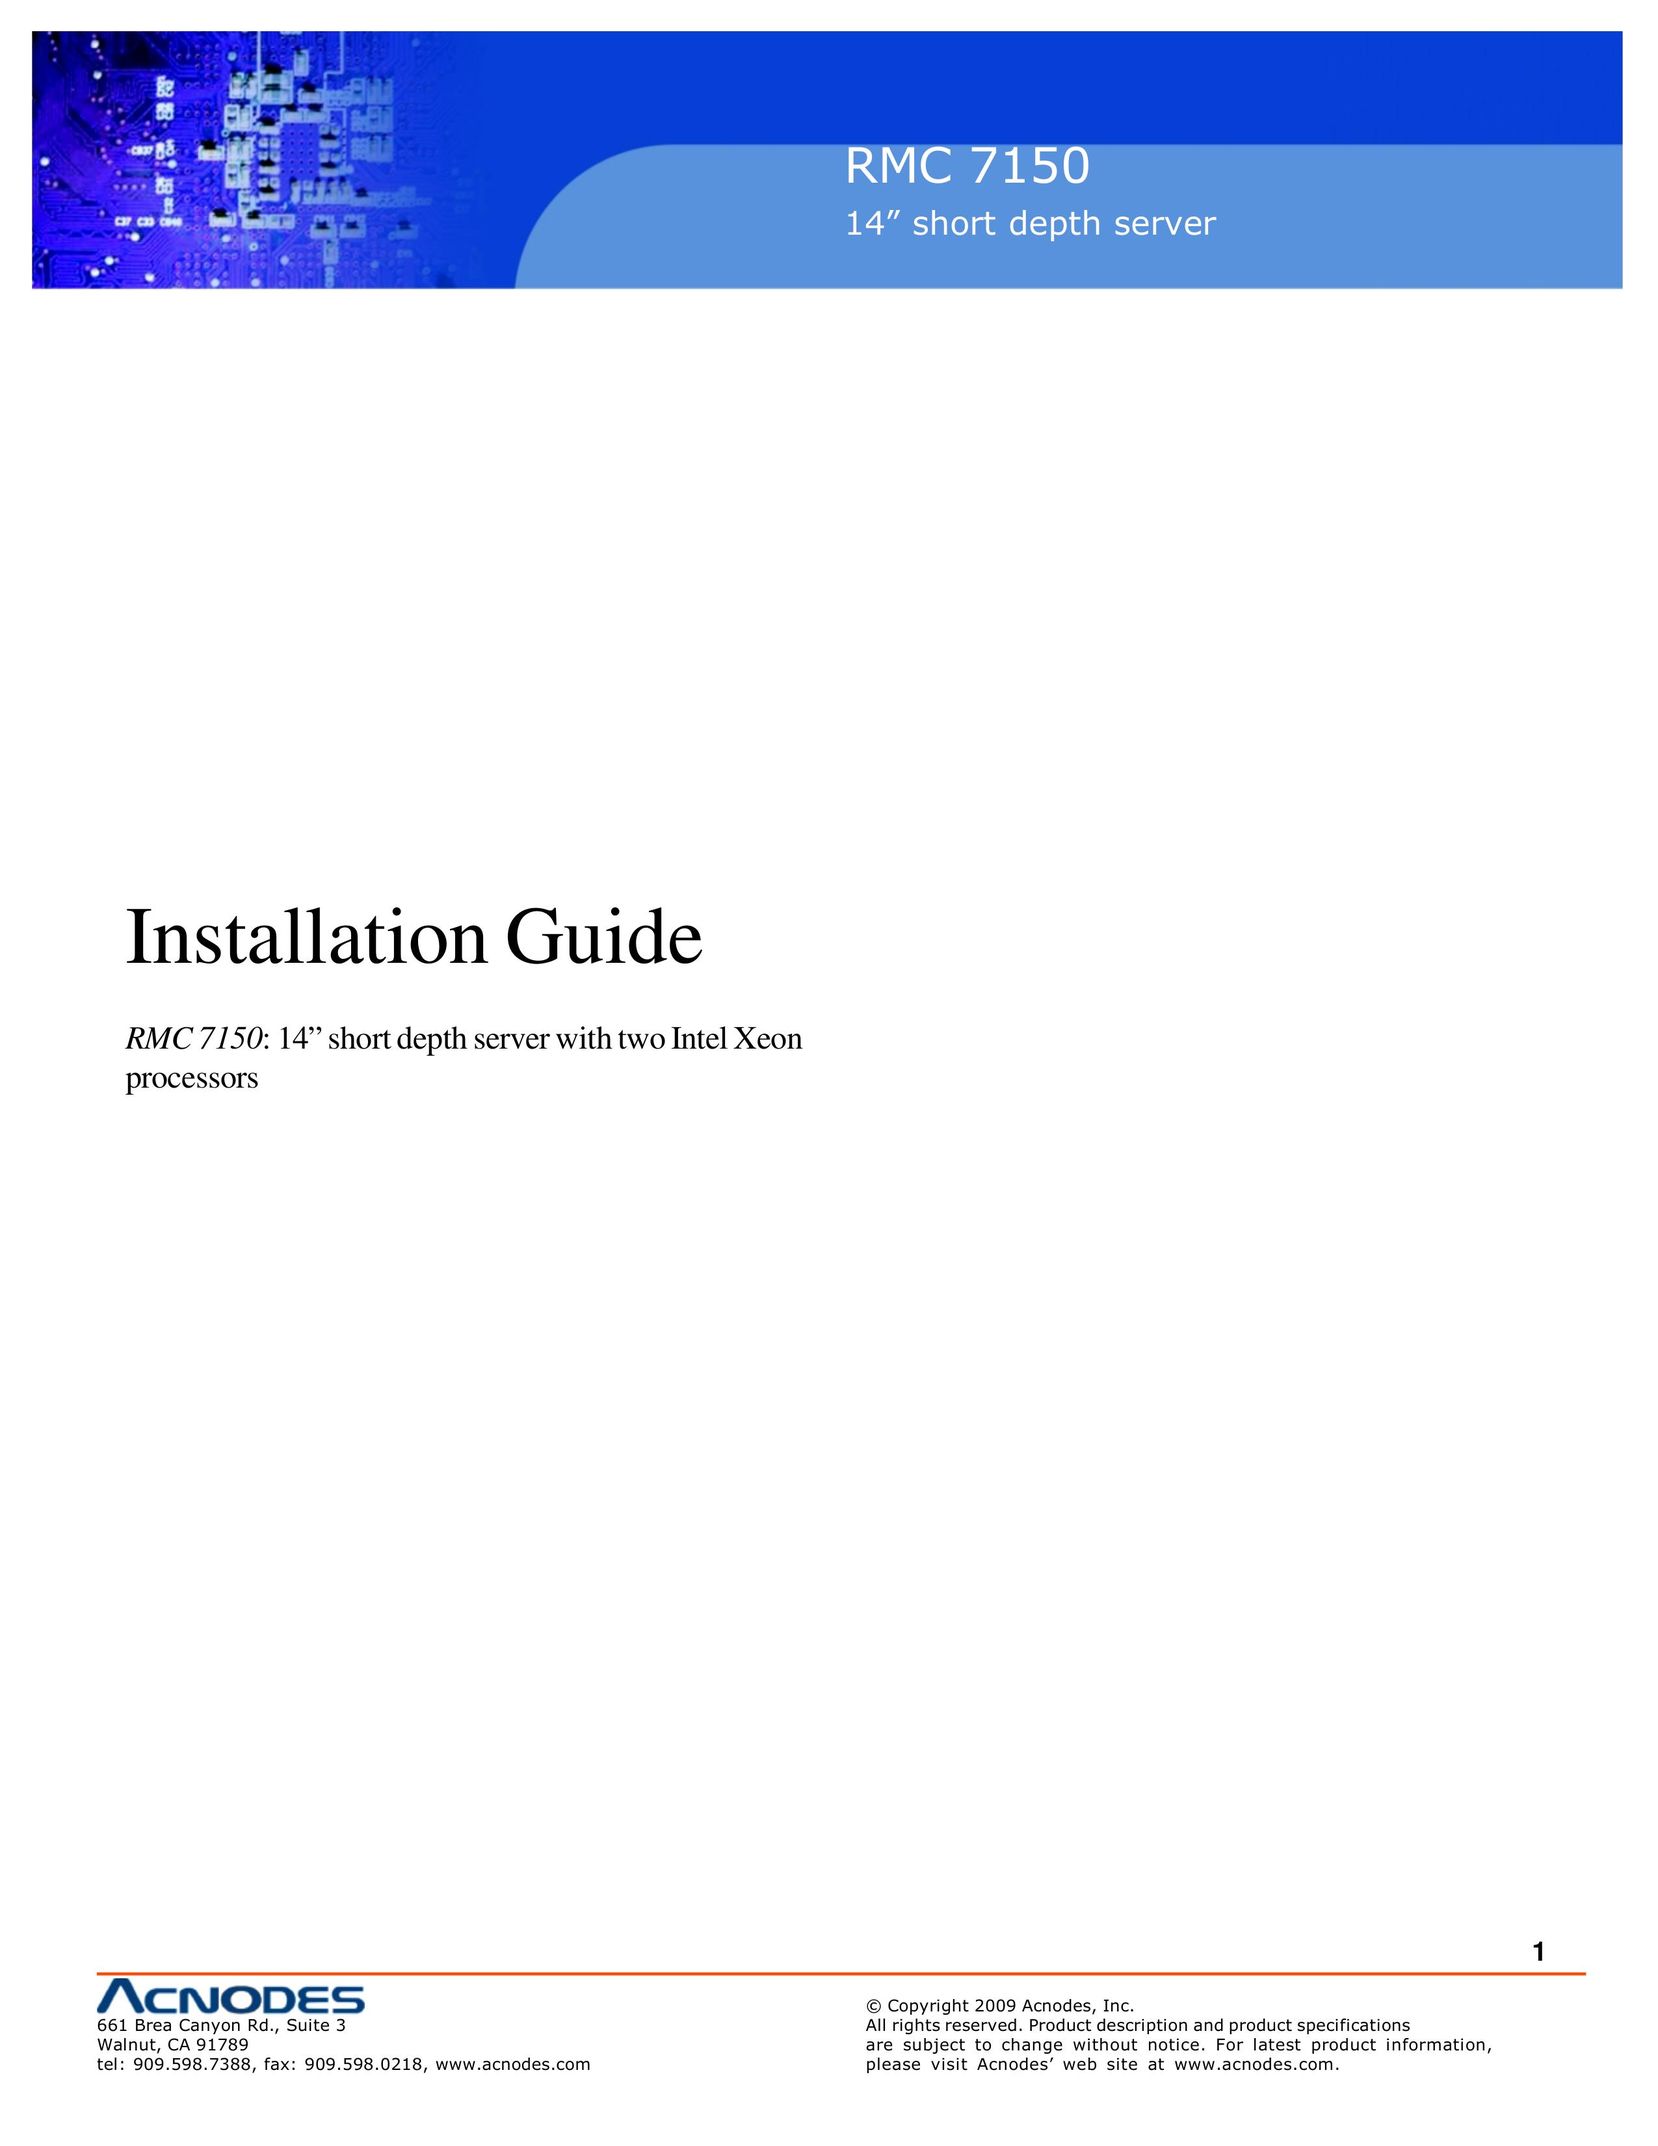 Acnodes RMC 7150 Server User Manual